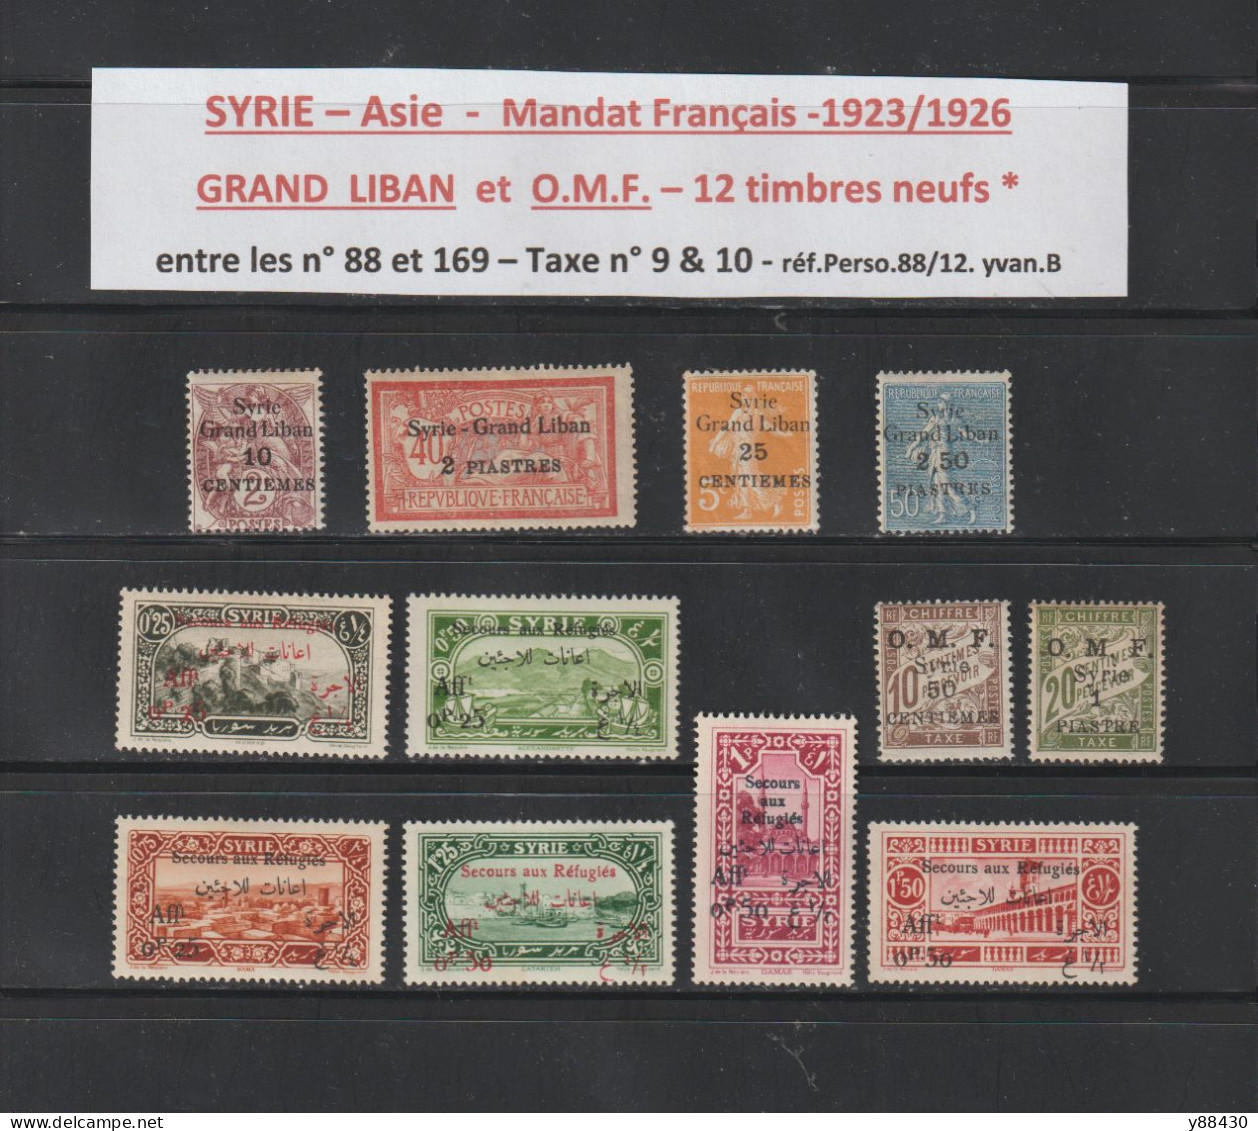 GRAND LIBAN Et O.M.F.- Mandat Français - 12 Timbres Dont 2 Taxe - Neuf * De 1923/1926 - 2 Scan - Unused Stamps